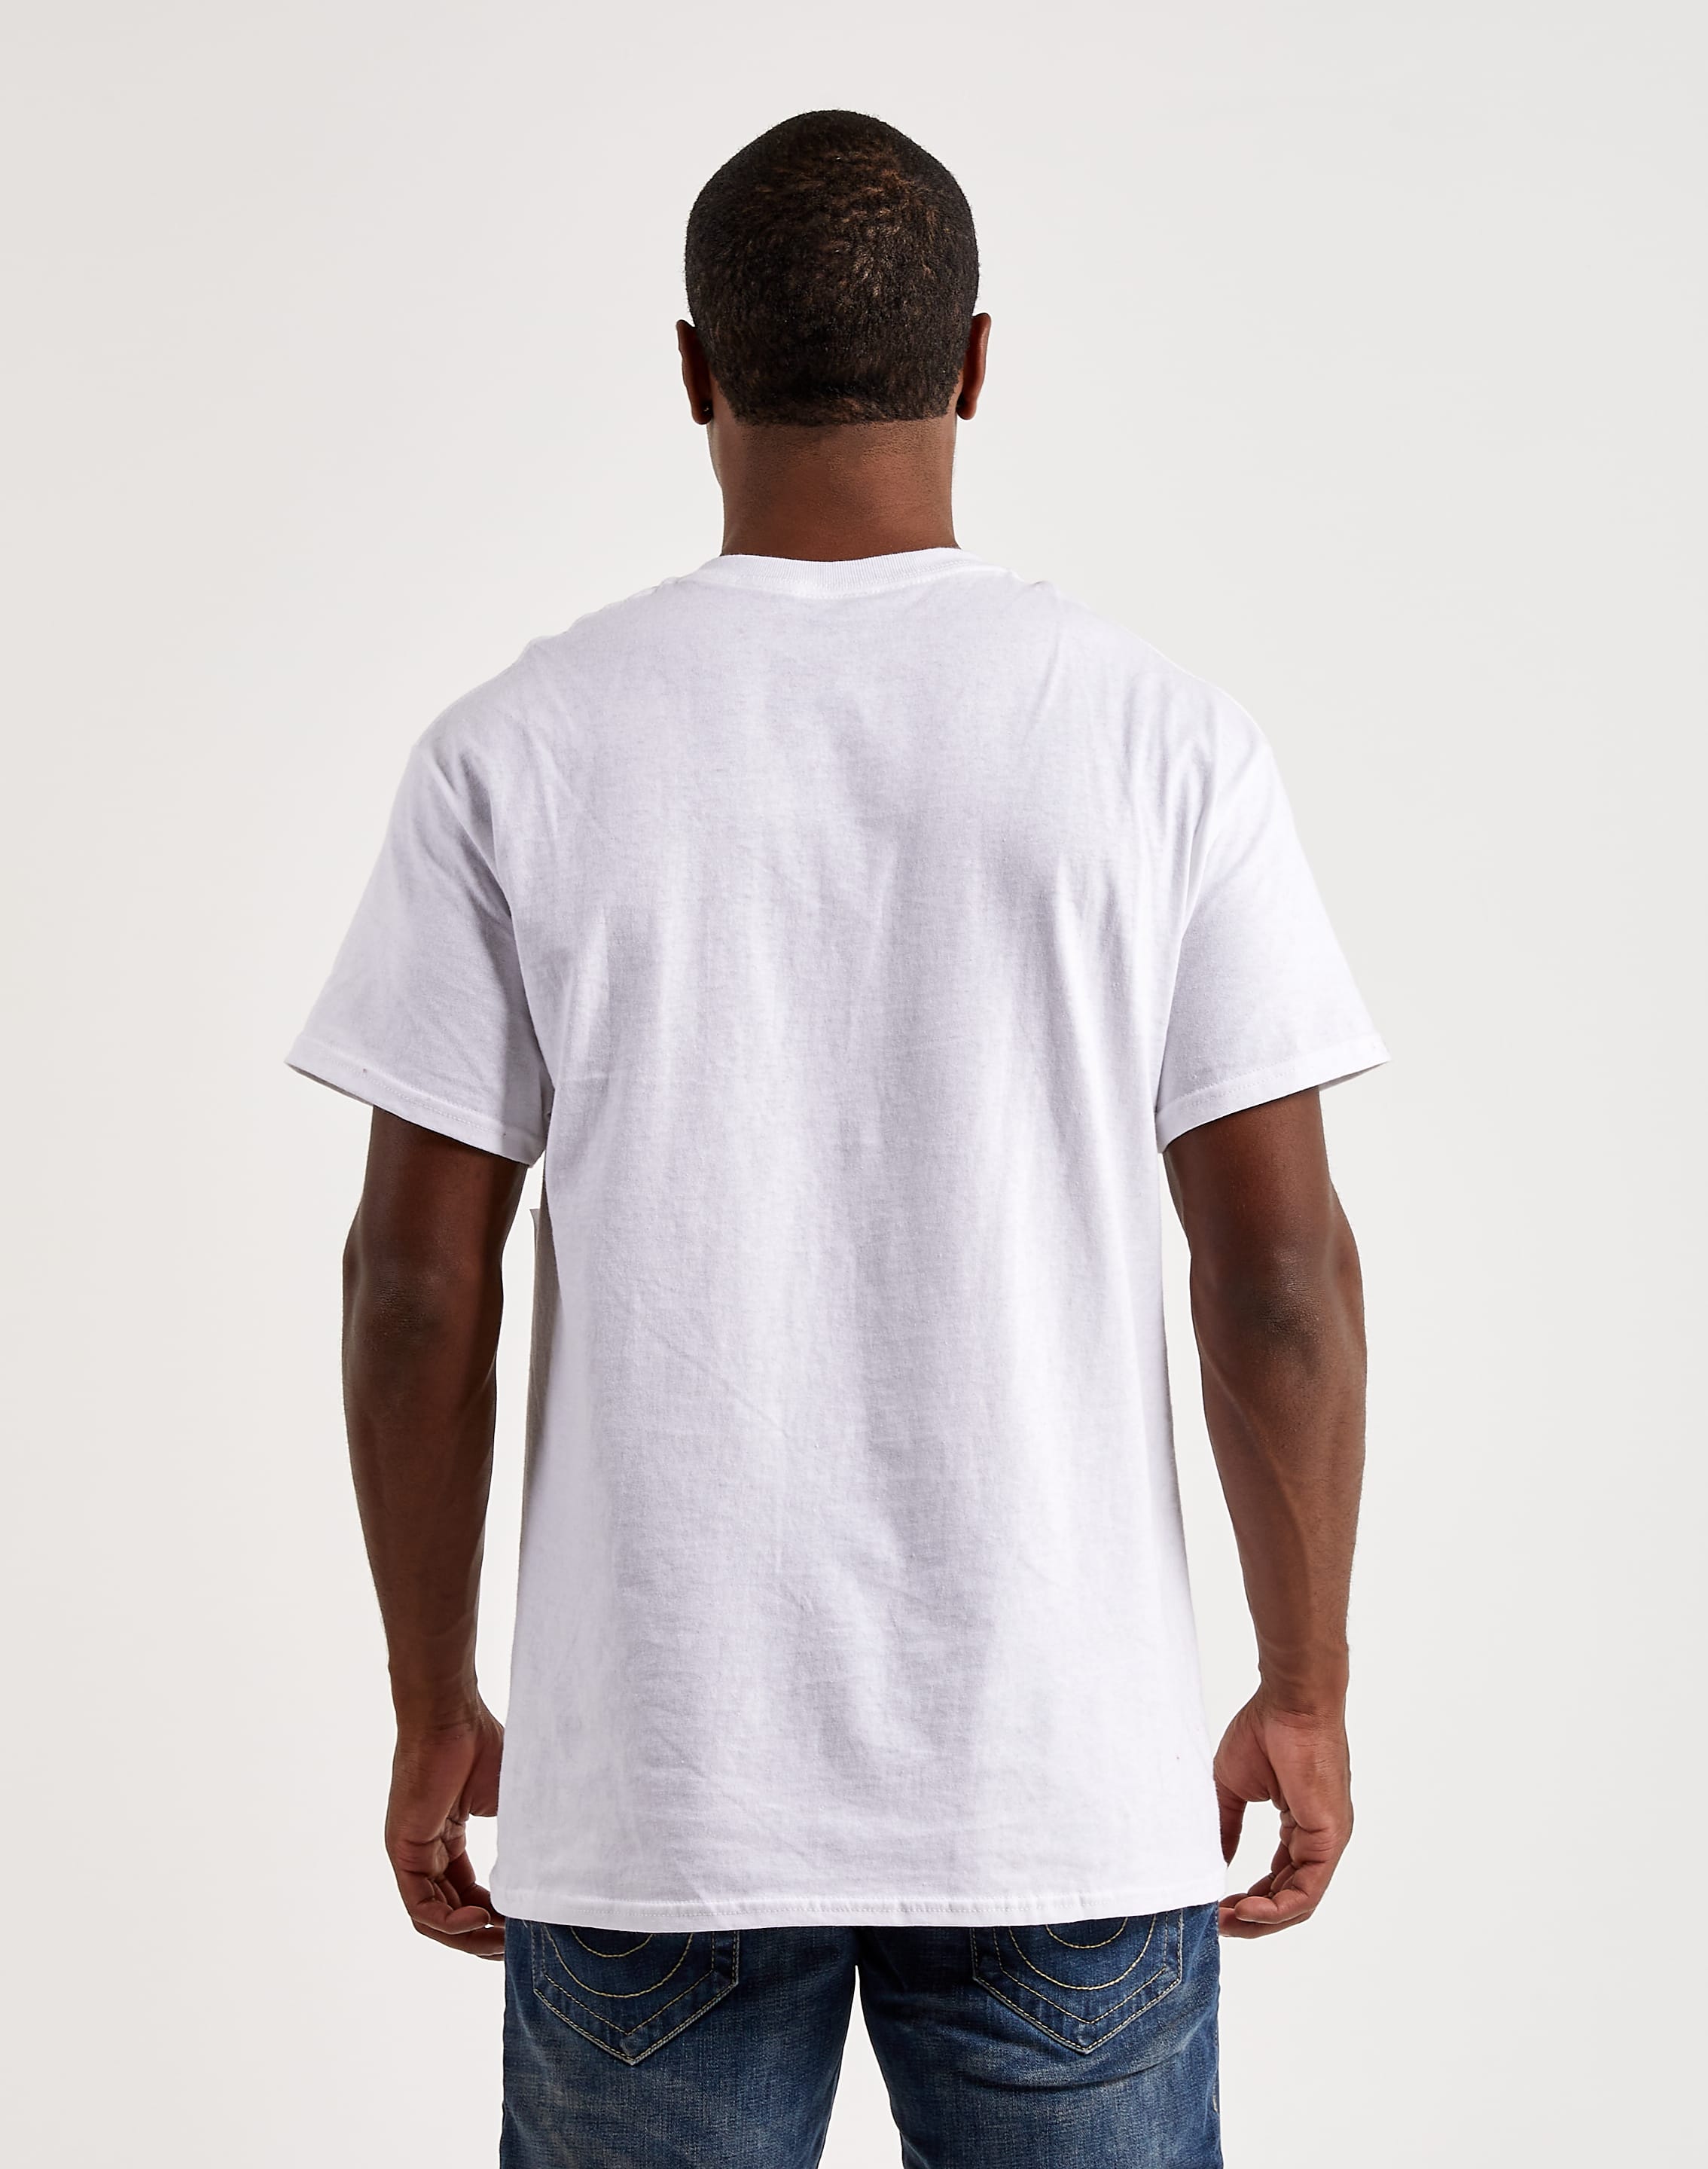 Regular Fit T-shirt - White/The Notorious B.I.G. - Men